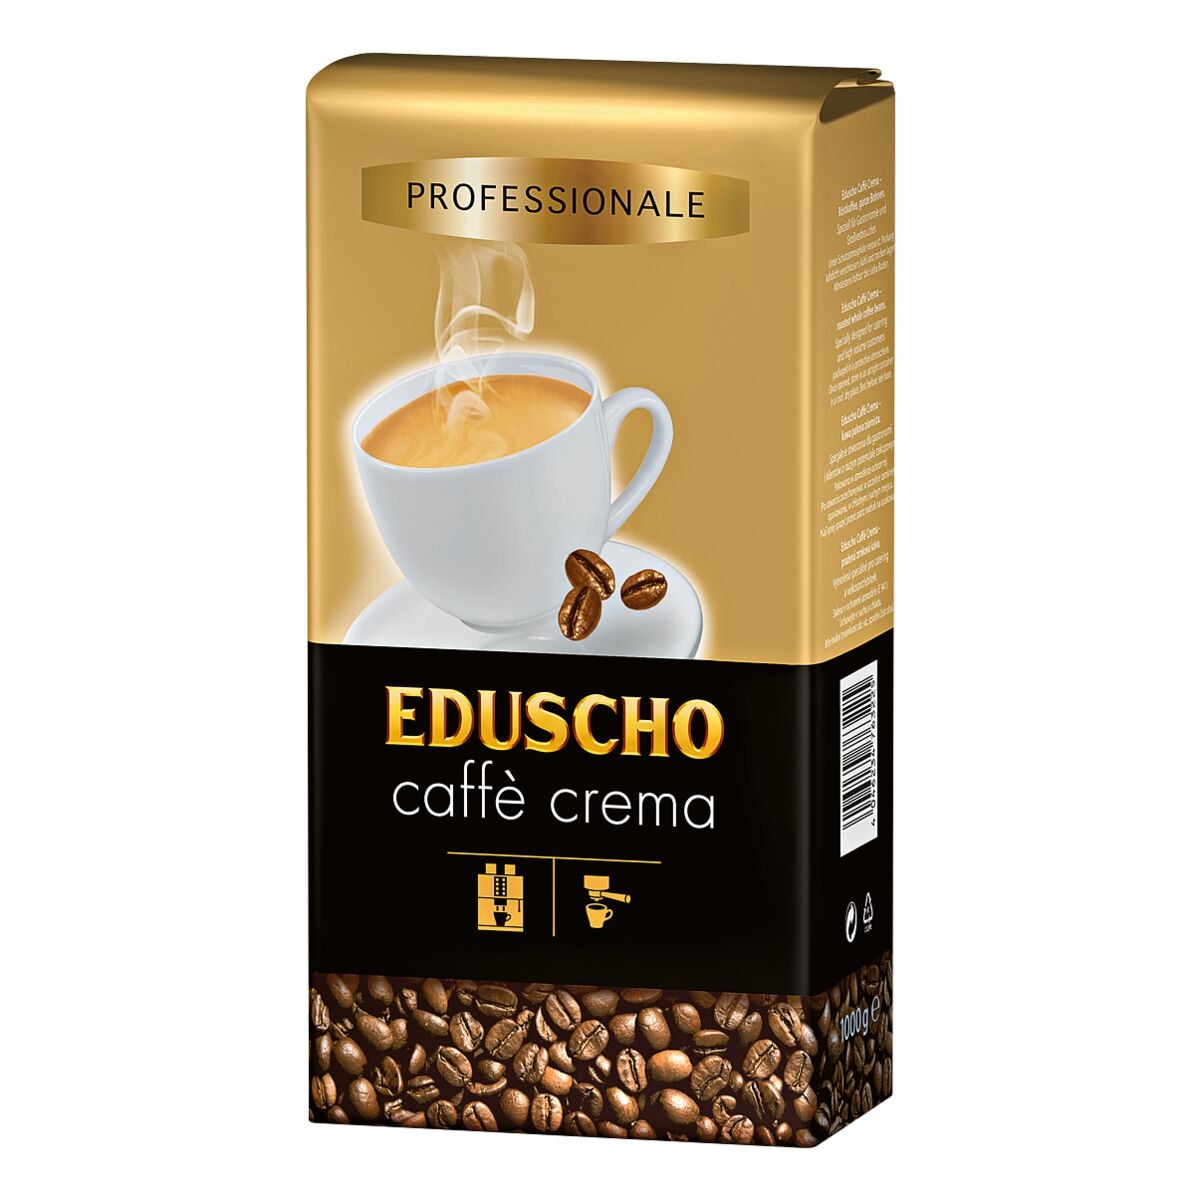 EDUSCHO Professionale caff crema Kaffeebohnen 1000 g